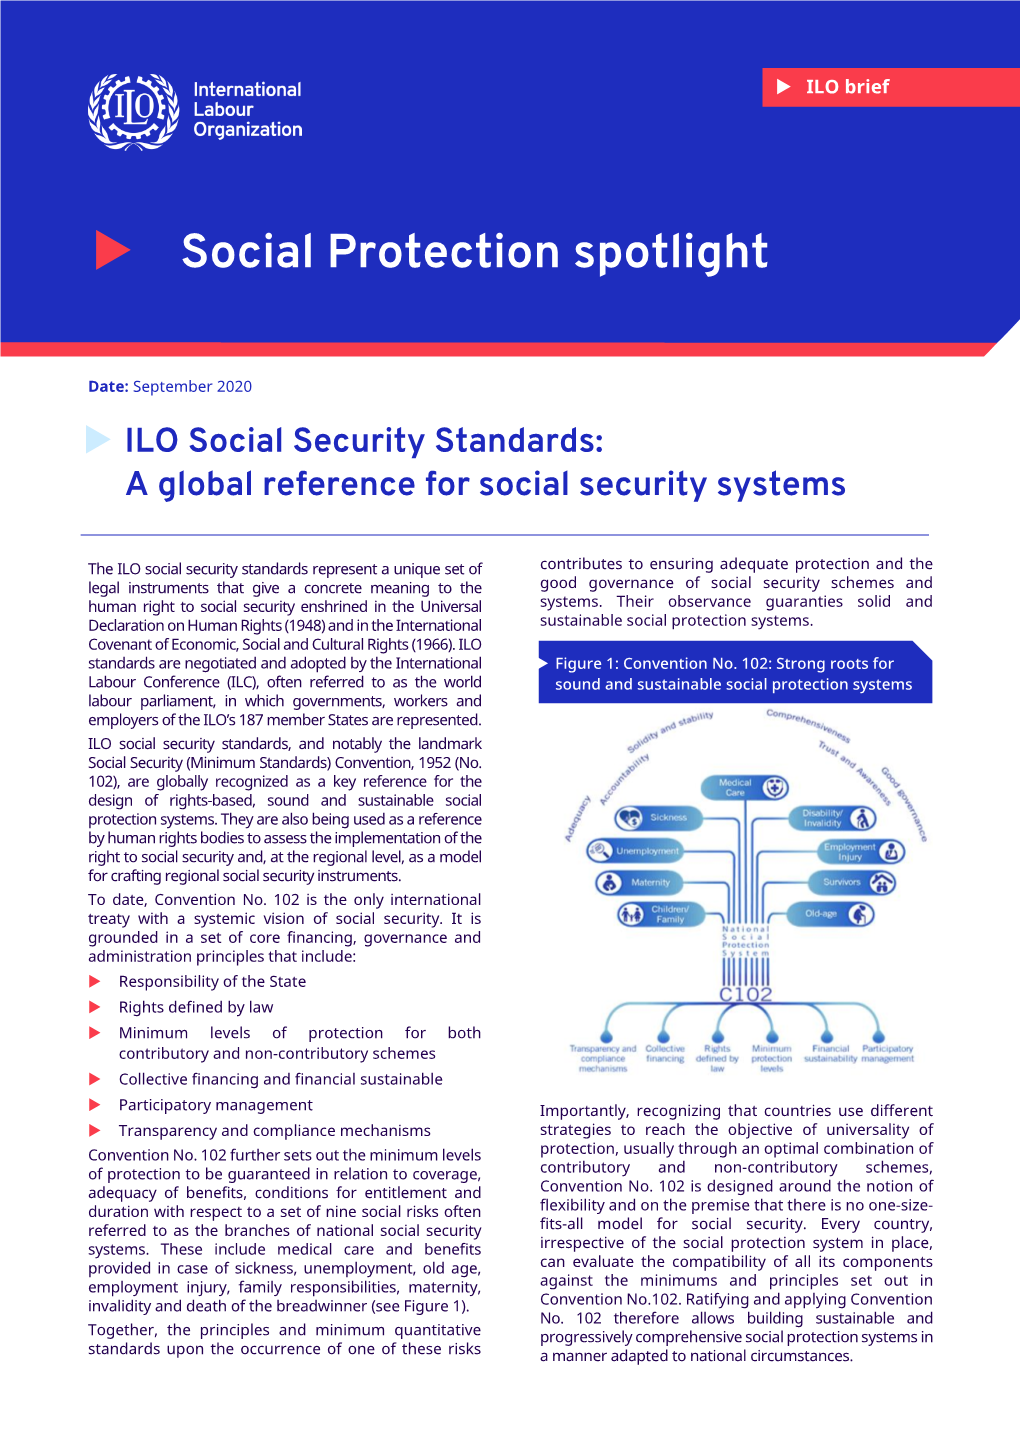 Social Protection Spotlight